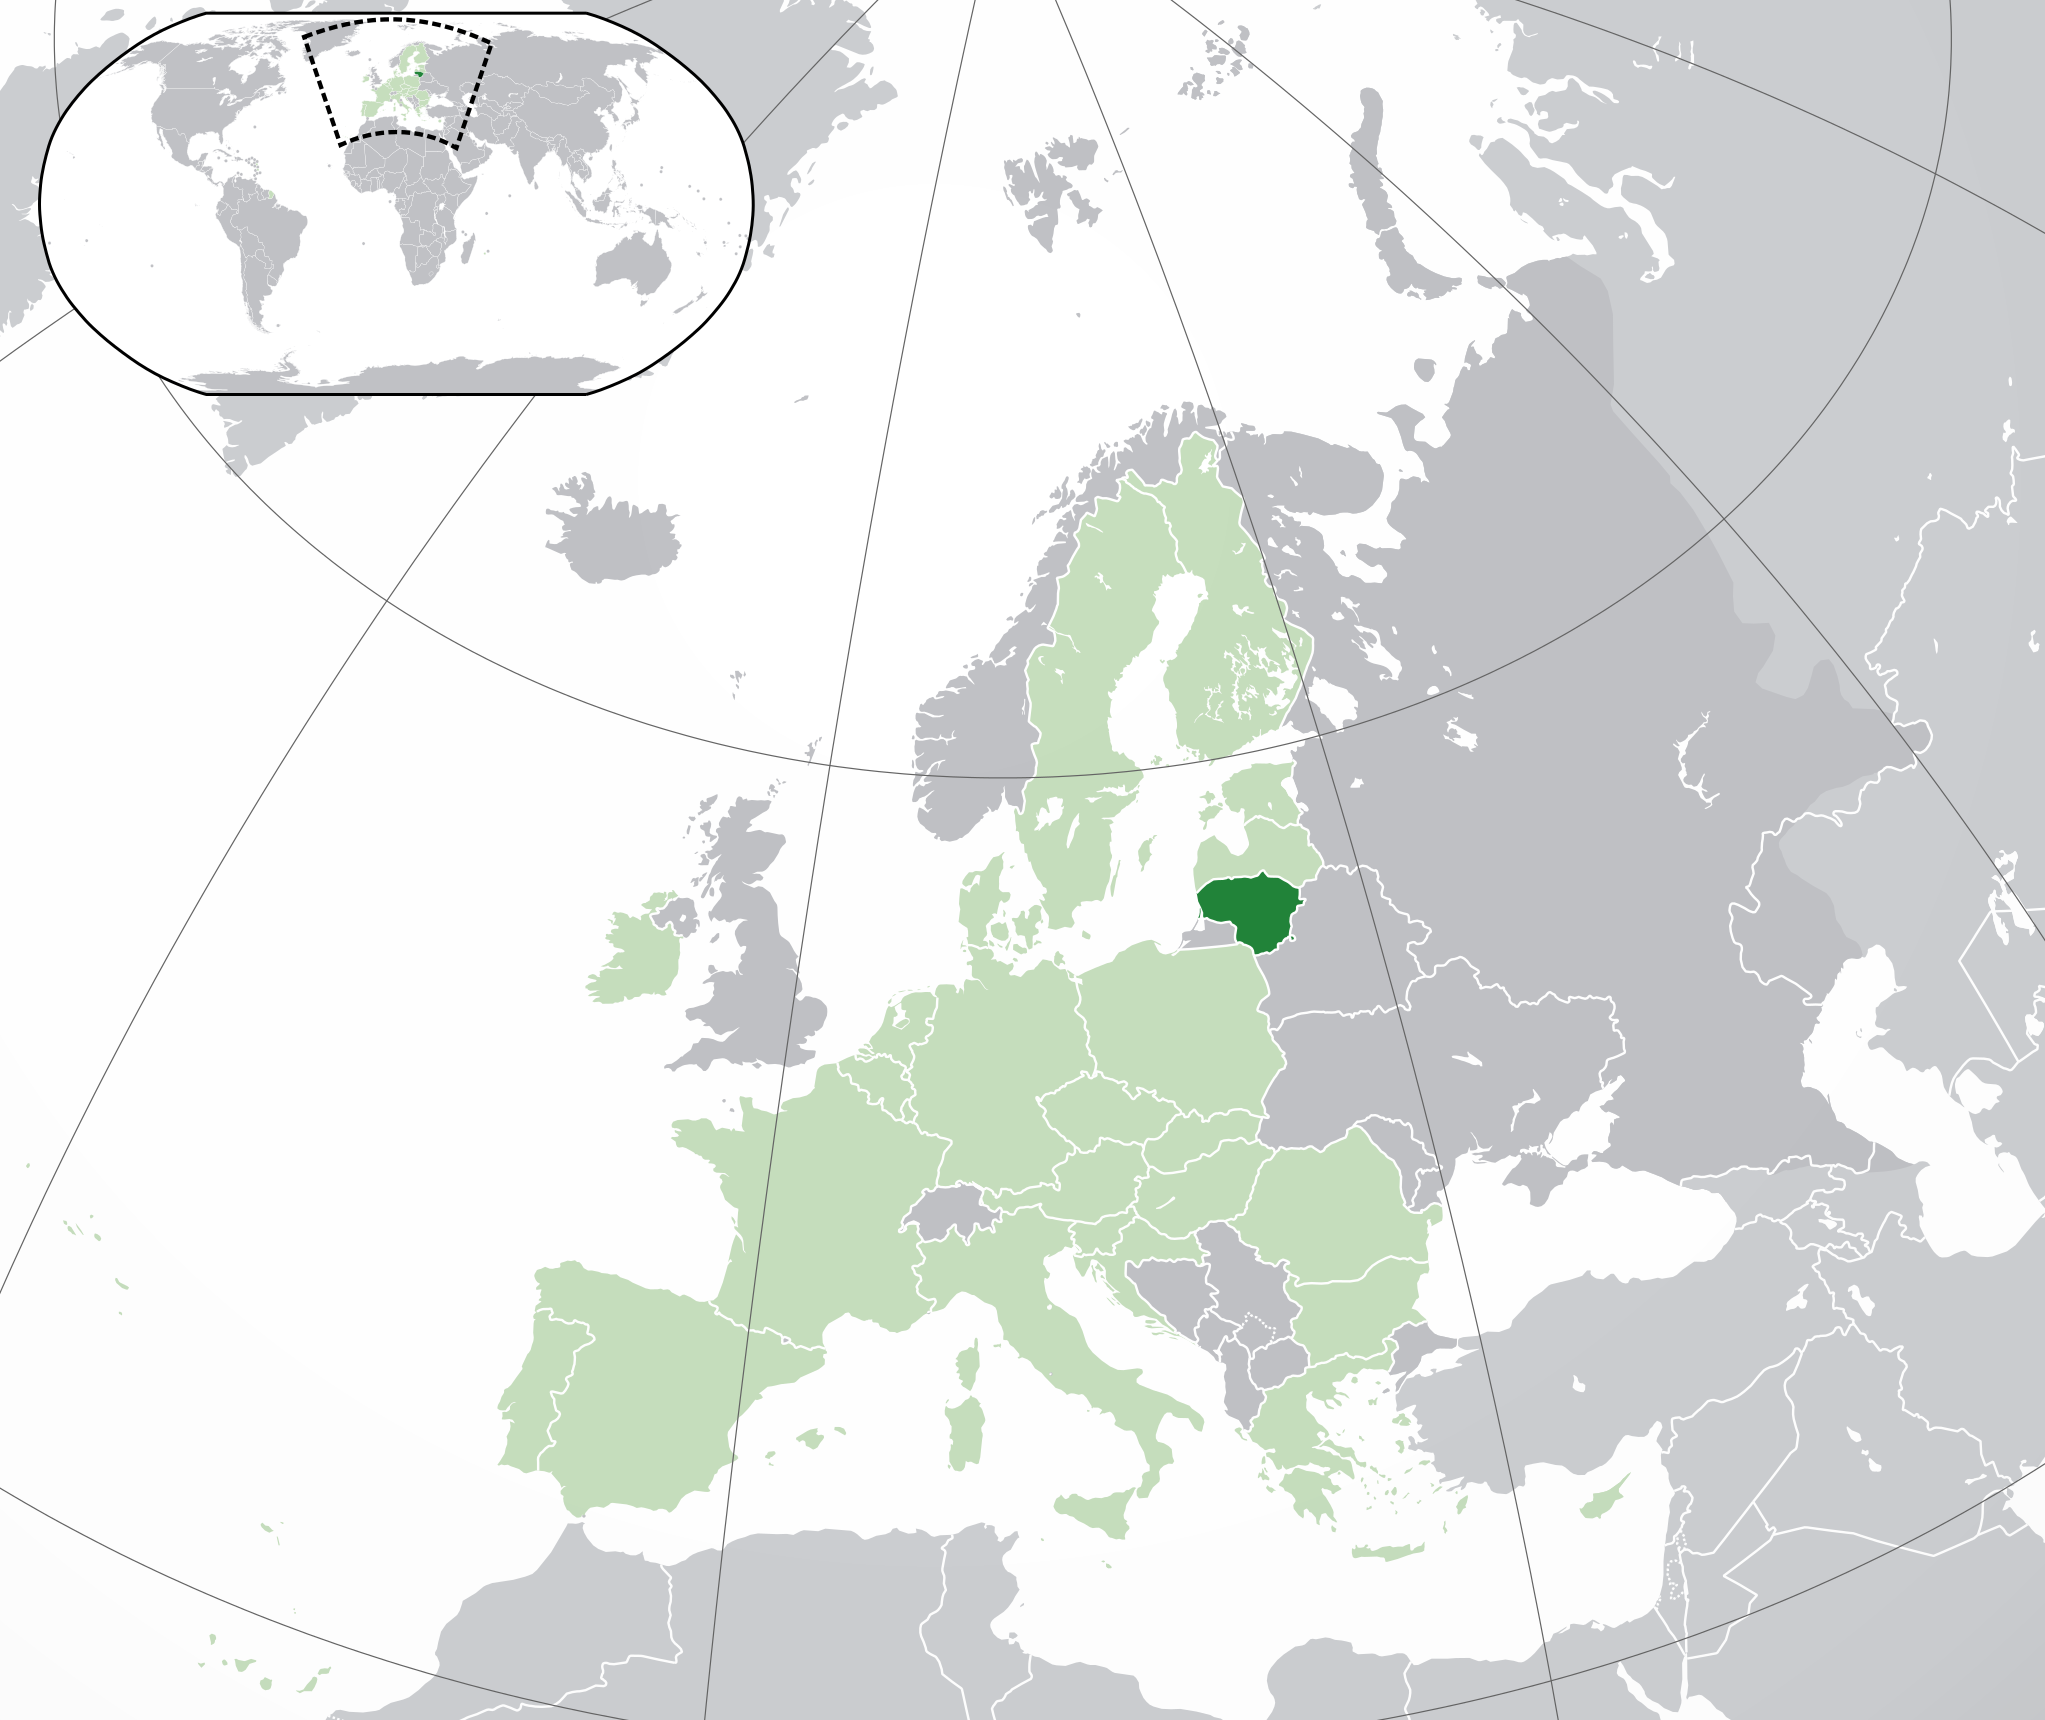 Lithuania (dark green) in the European Union (light green)